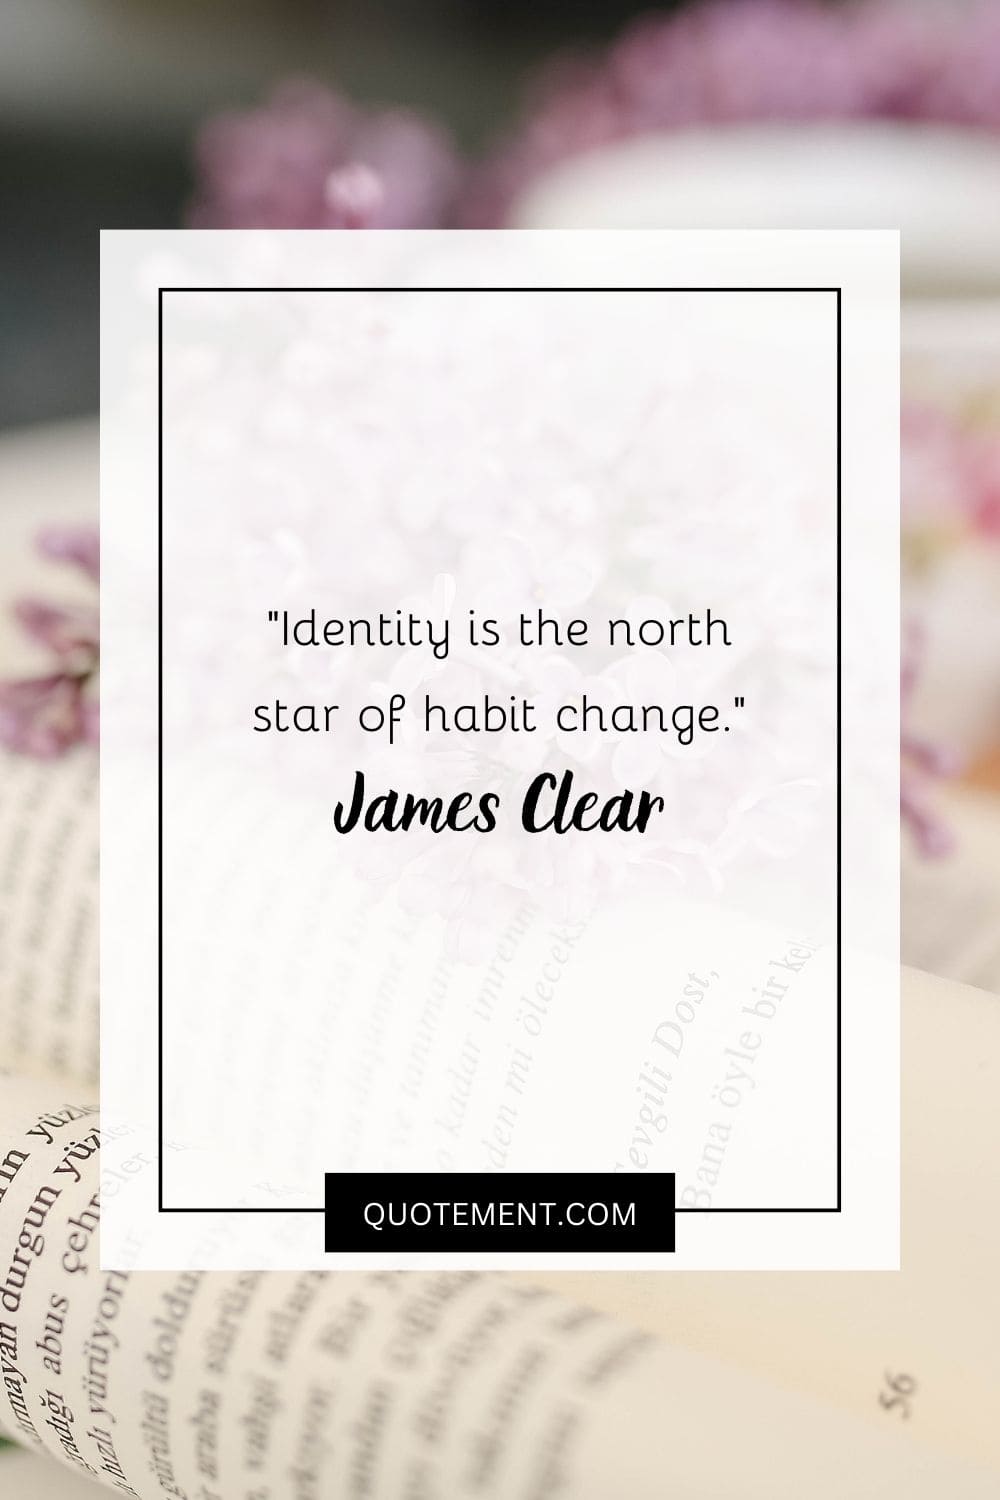 Identity is the north star of habit change